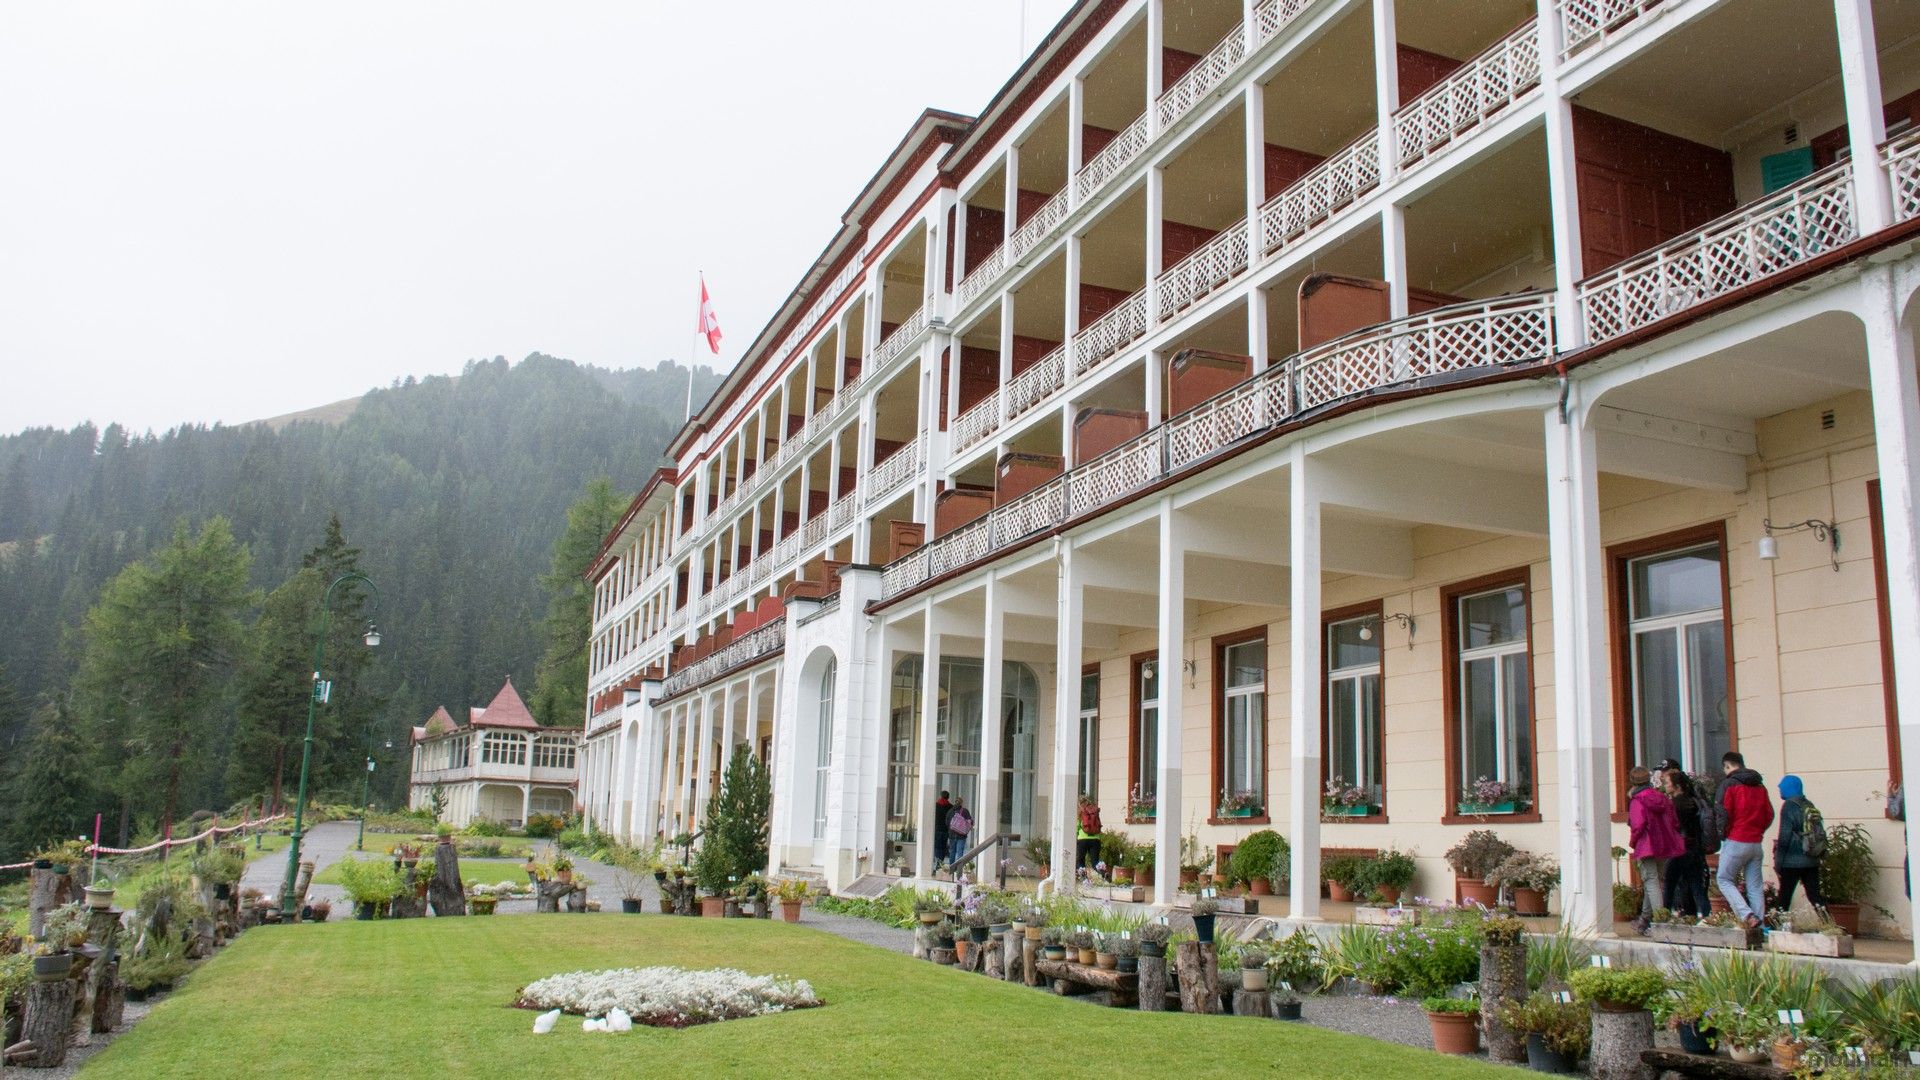 Schatzalp Hotel – Davos Švýcarsko